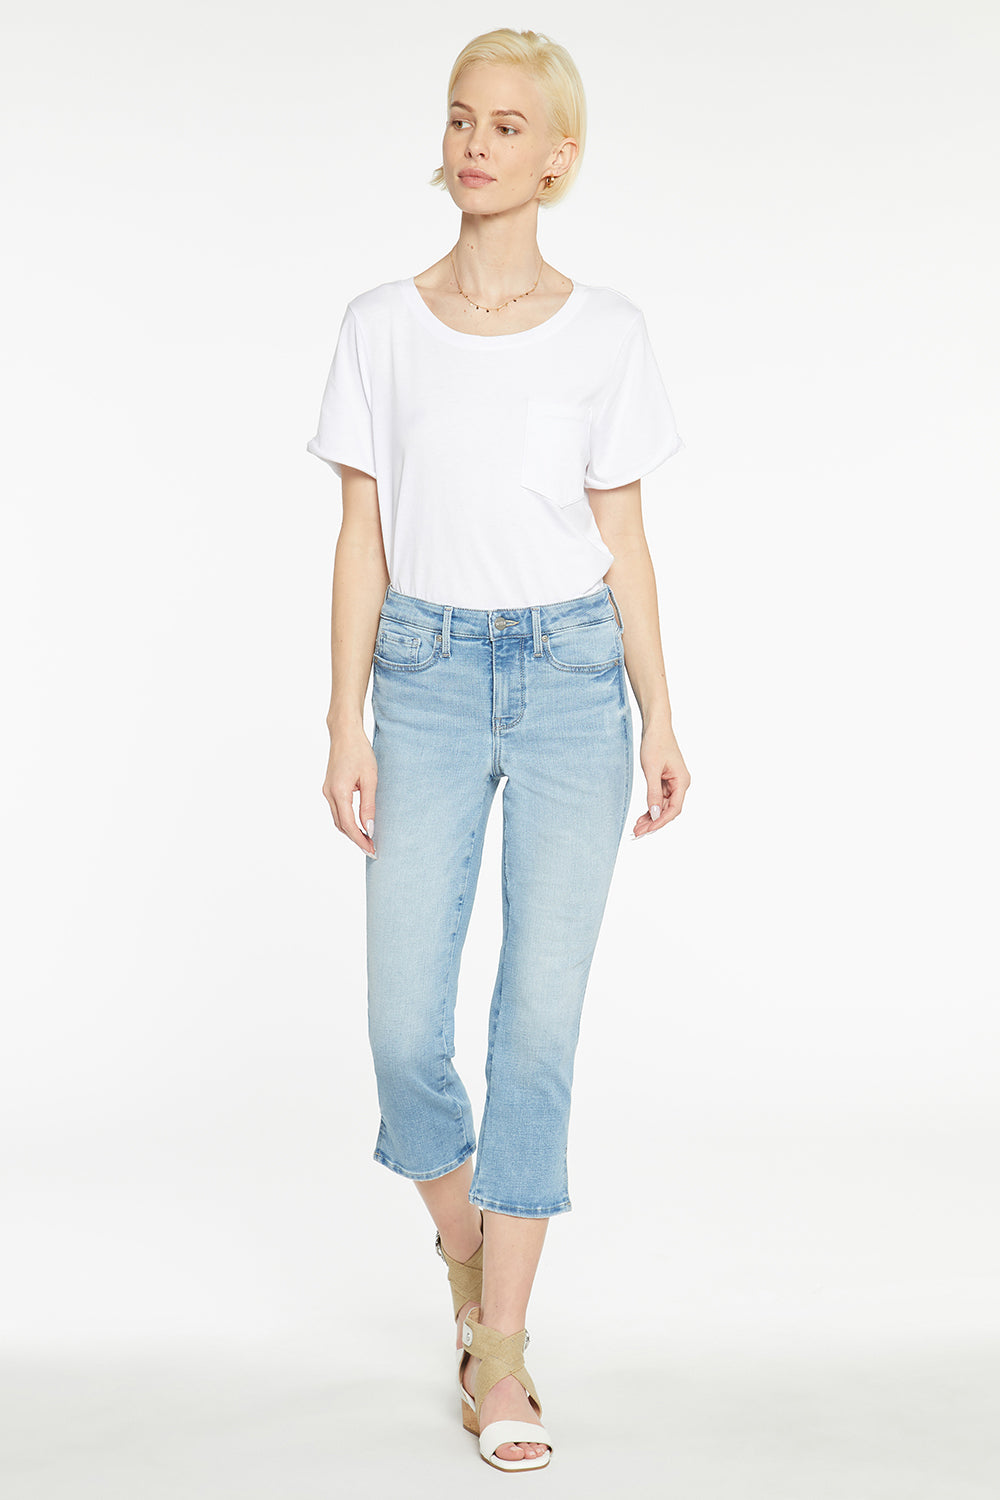 Chloe Capri Jeans In Petite With Side Slits - Easley | NYDJ